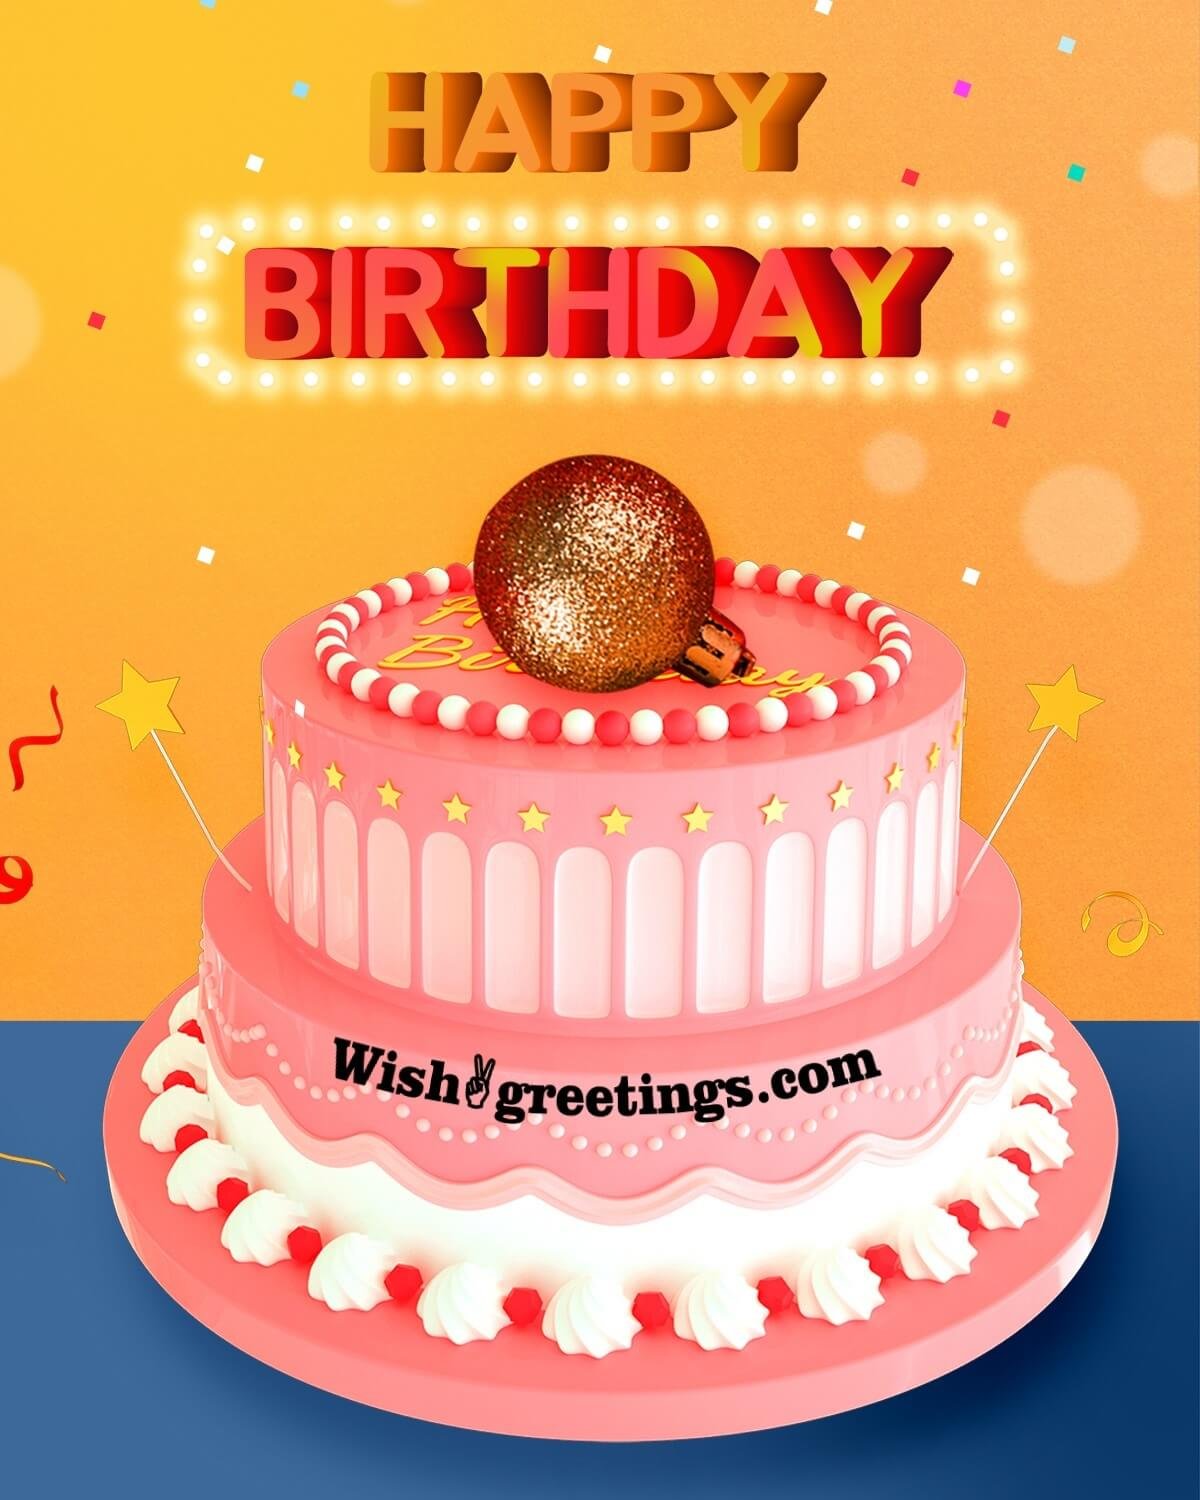 Happy Birthday Wishes Cake Images